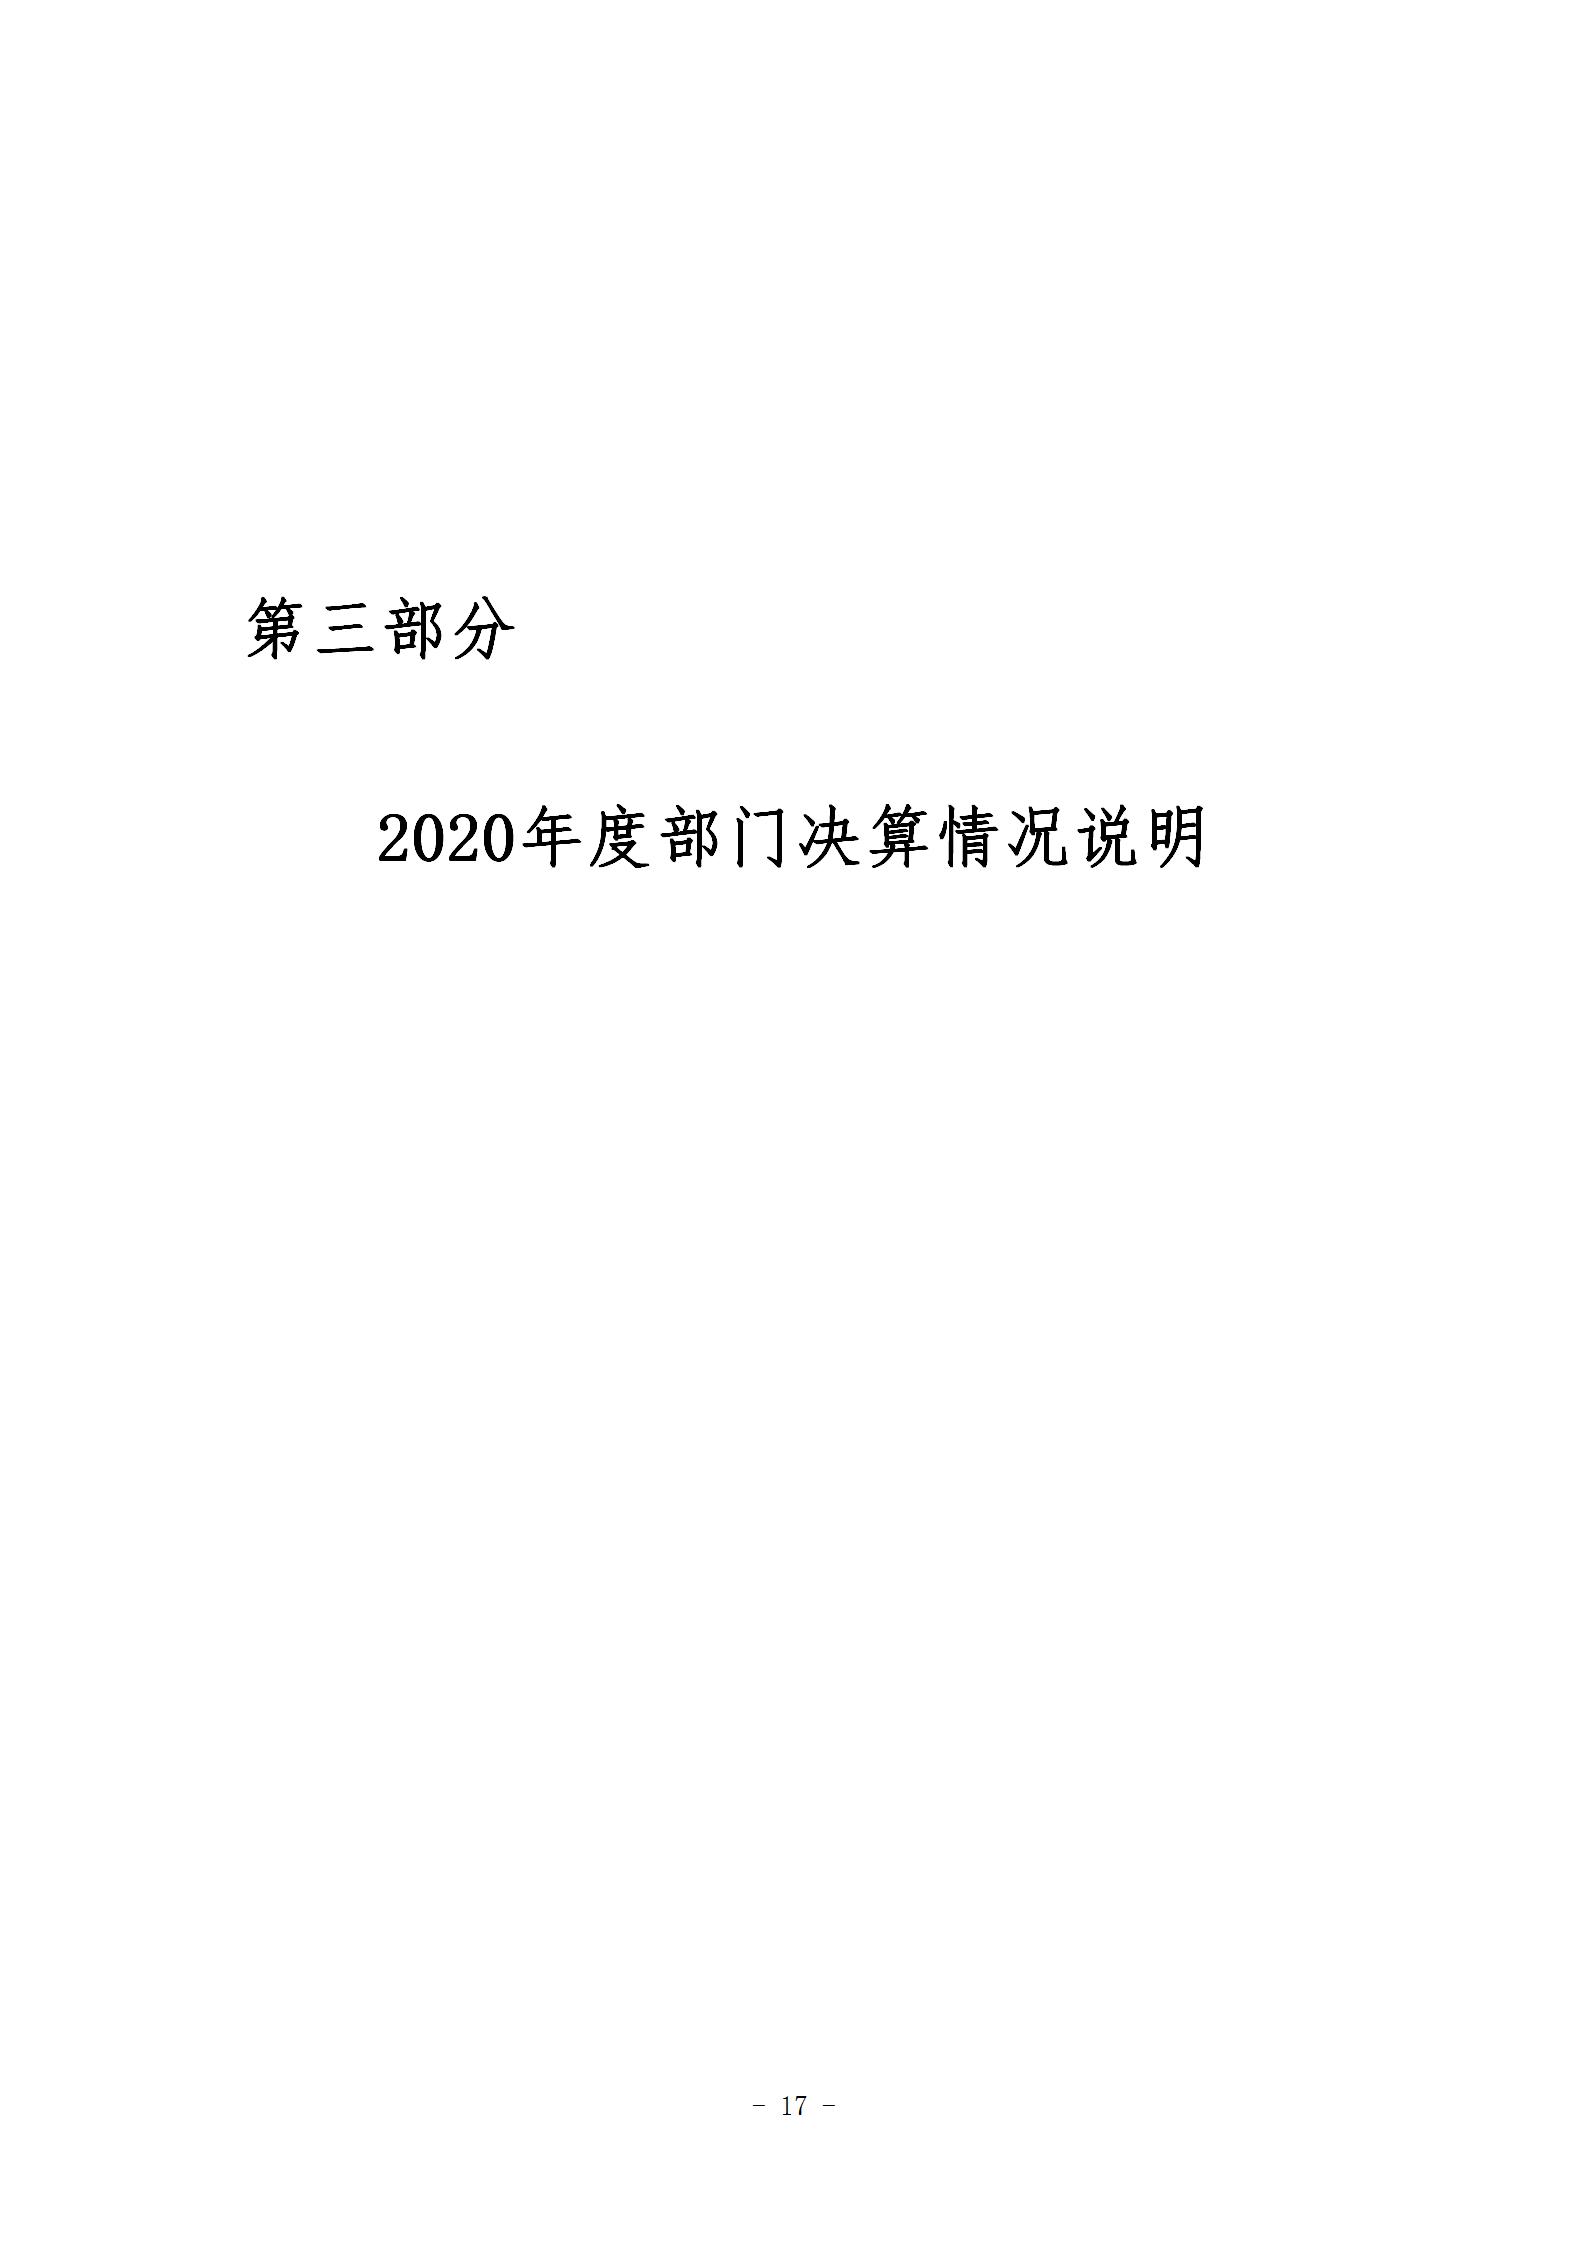 188bet亚洲民间外交战略研究中心2020年度部门决算_17.jpg